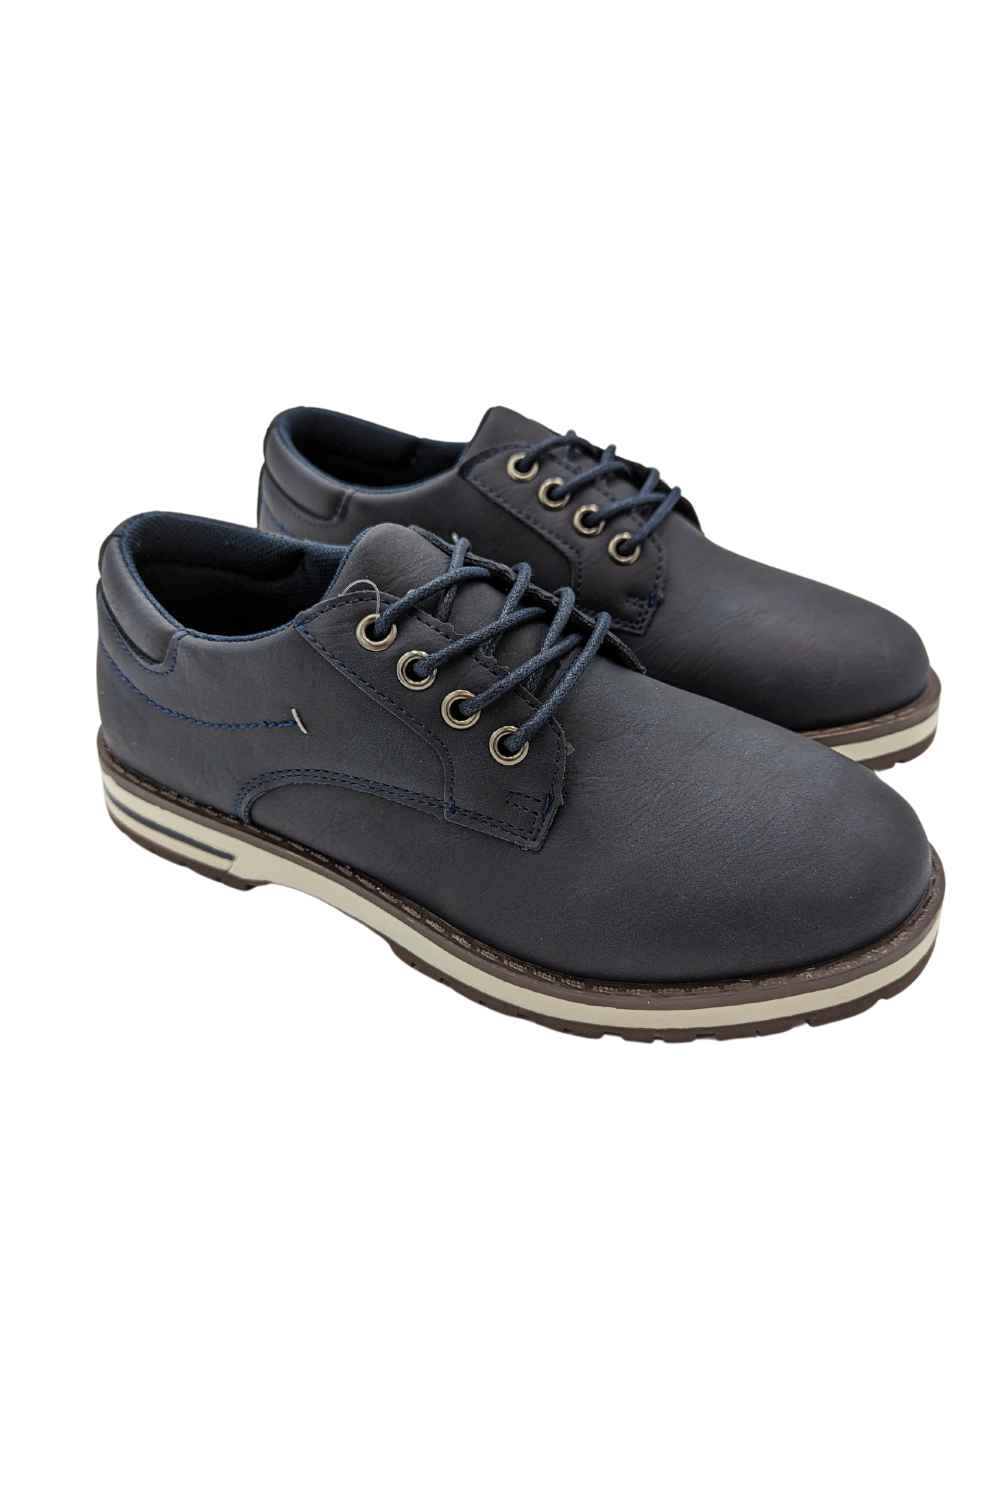 Leon Boys Navy Shoes